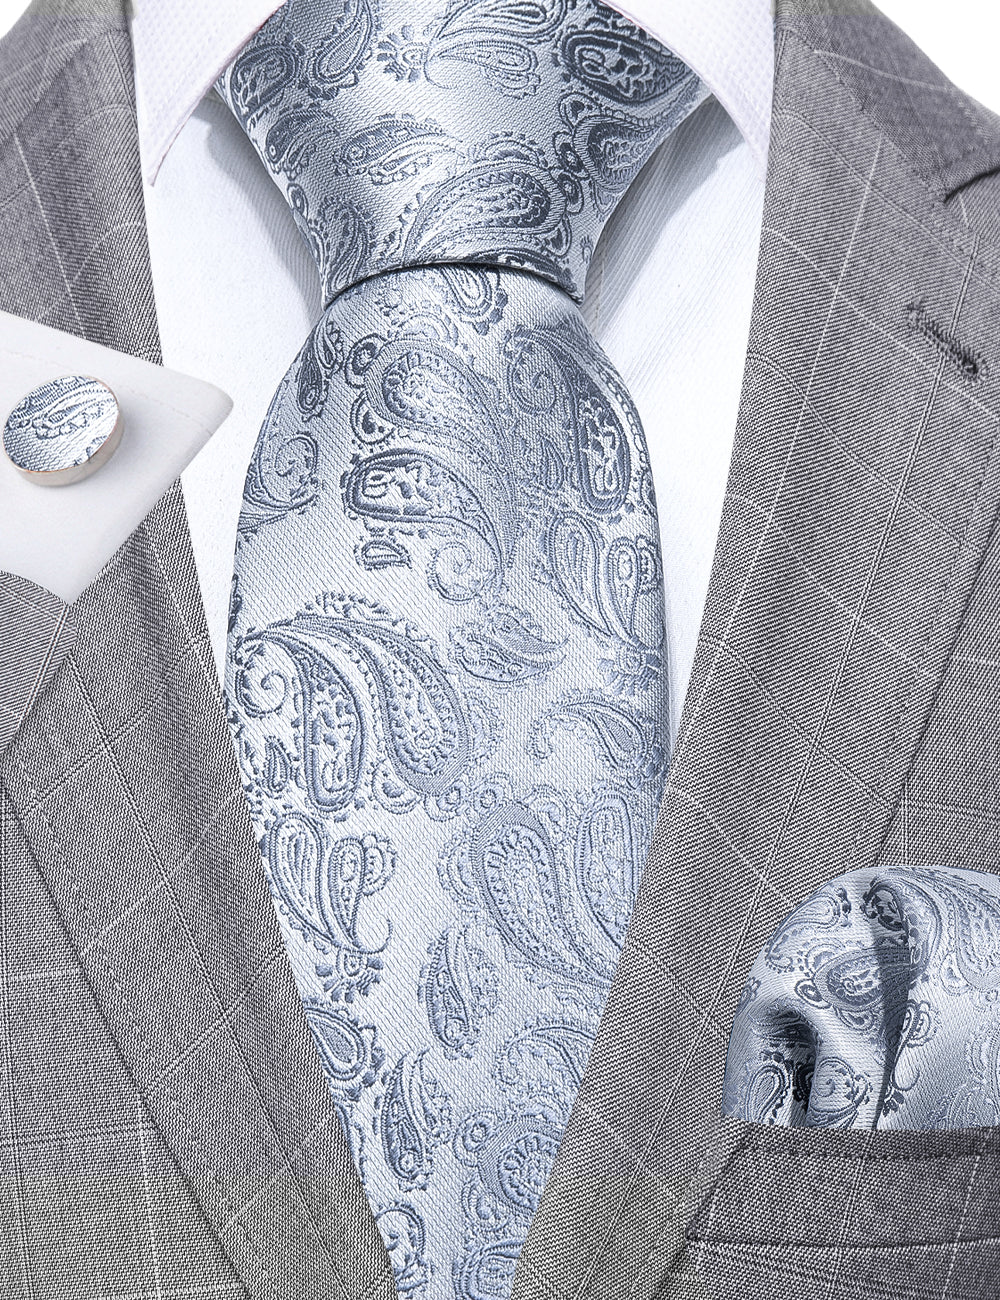 New Silver Paisley Necktie Pocket Square Cufflinks Set